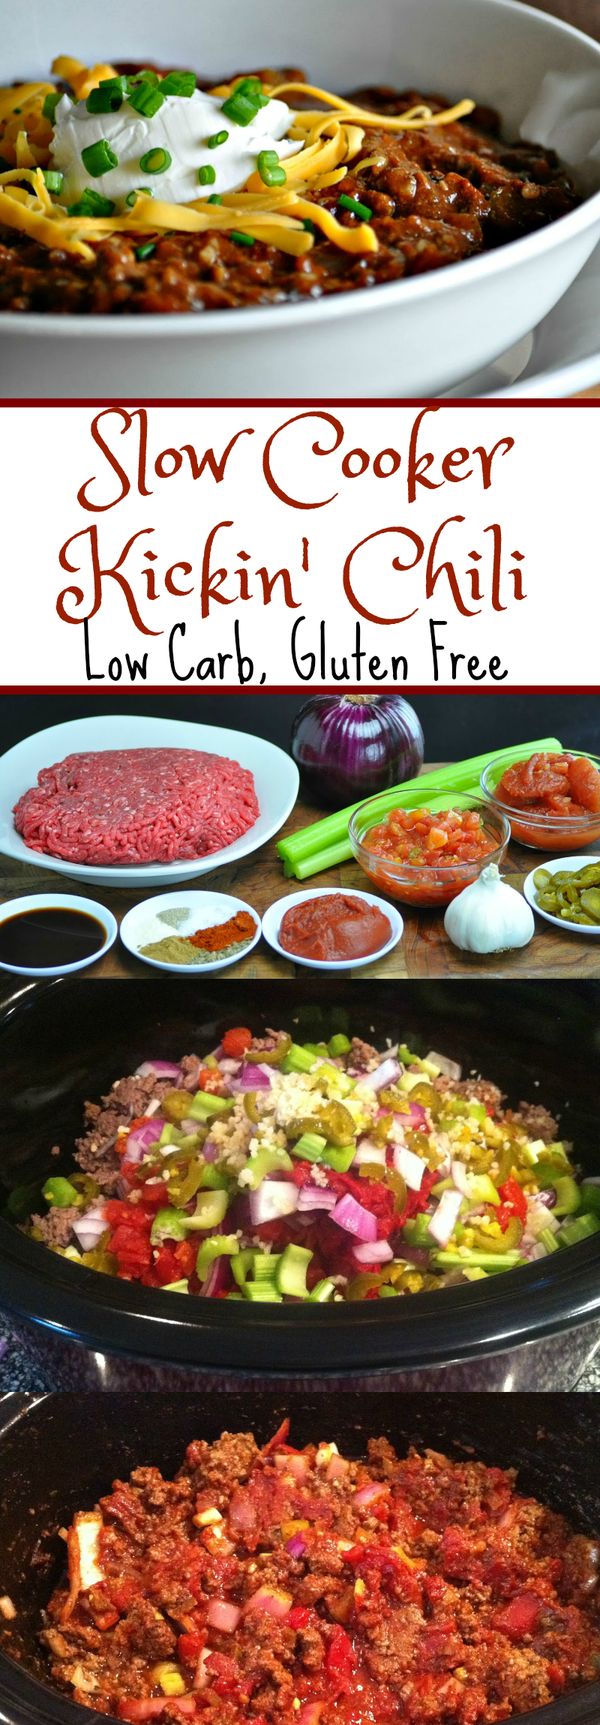 Kickin’ Chili – Low Carb, Gluten Free